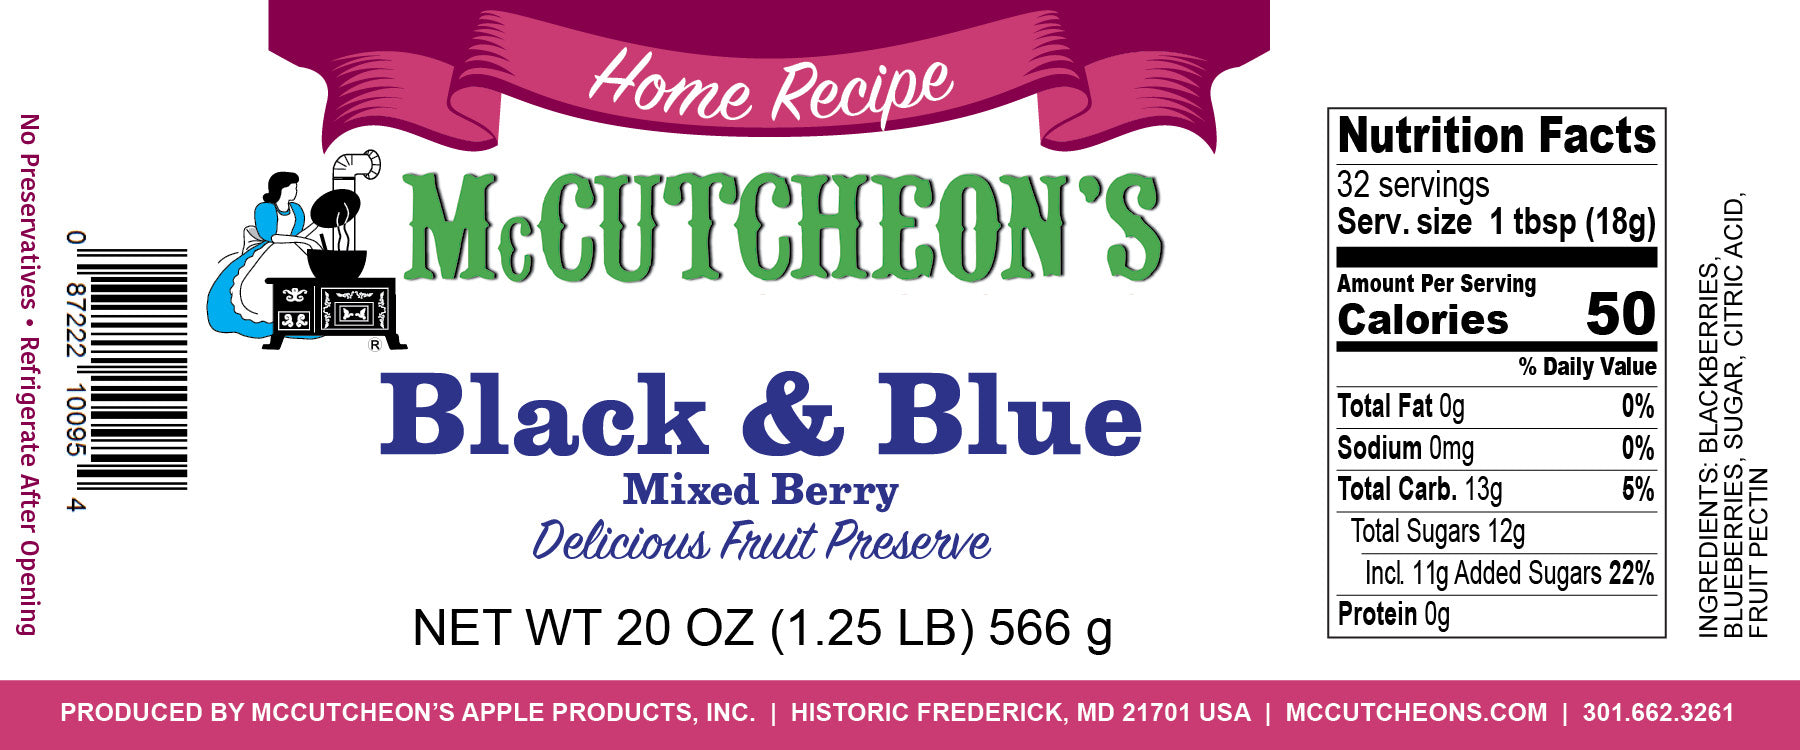 nutritional label for McCutcheon's Black & Blue preserves